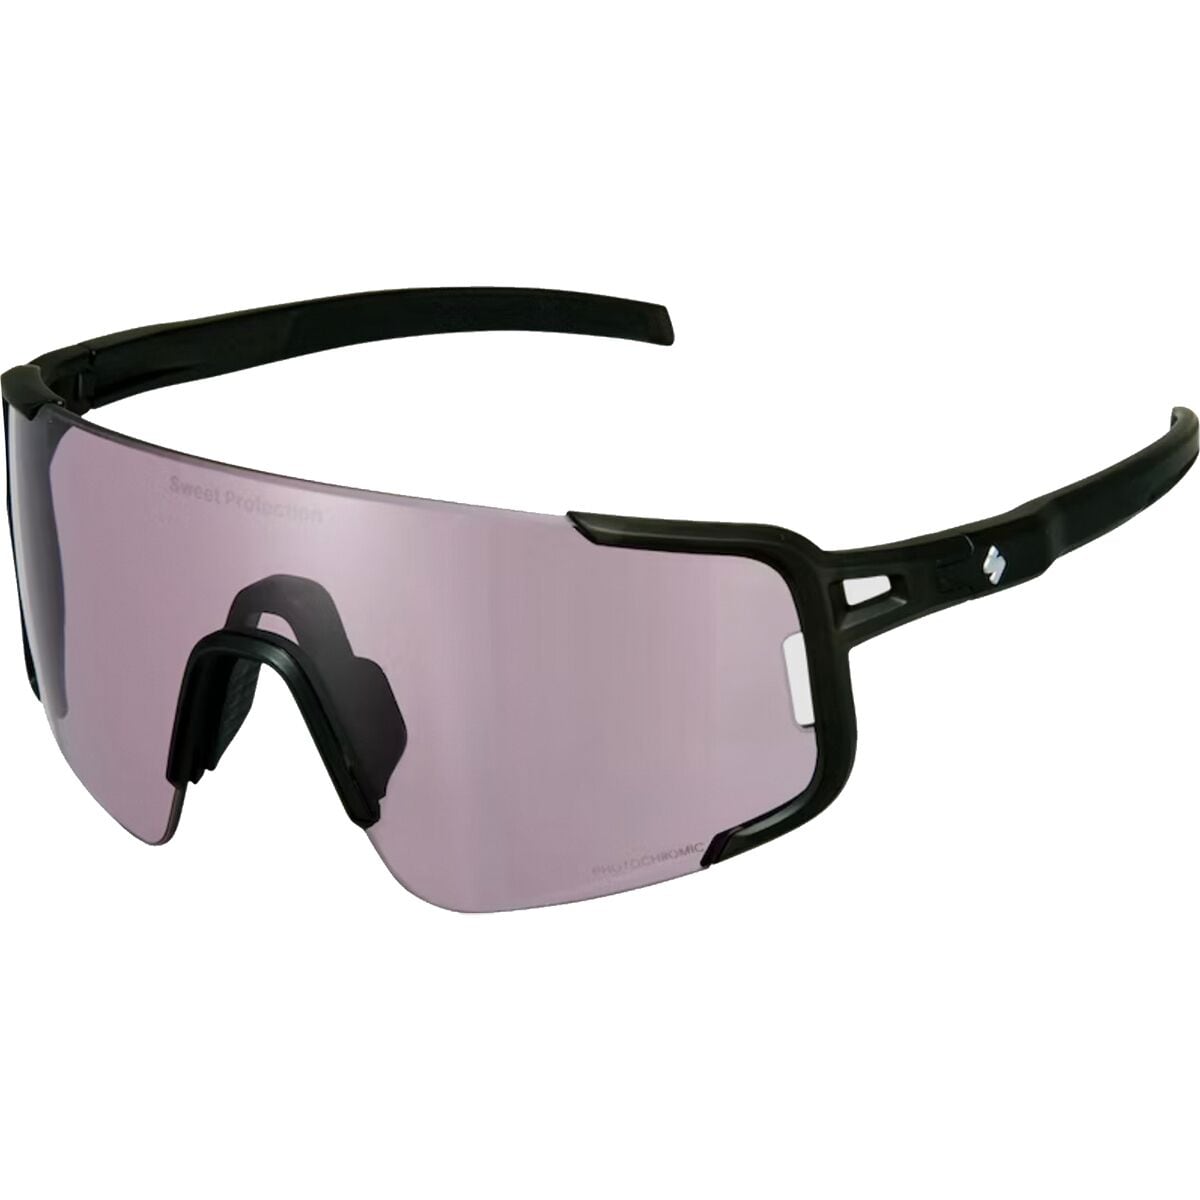 Фотохромные солнцезащитные очки ronin rig Sweet Protection, цвет rig photochromic/matte crystal black